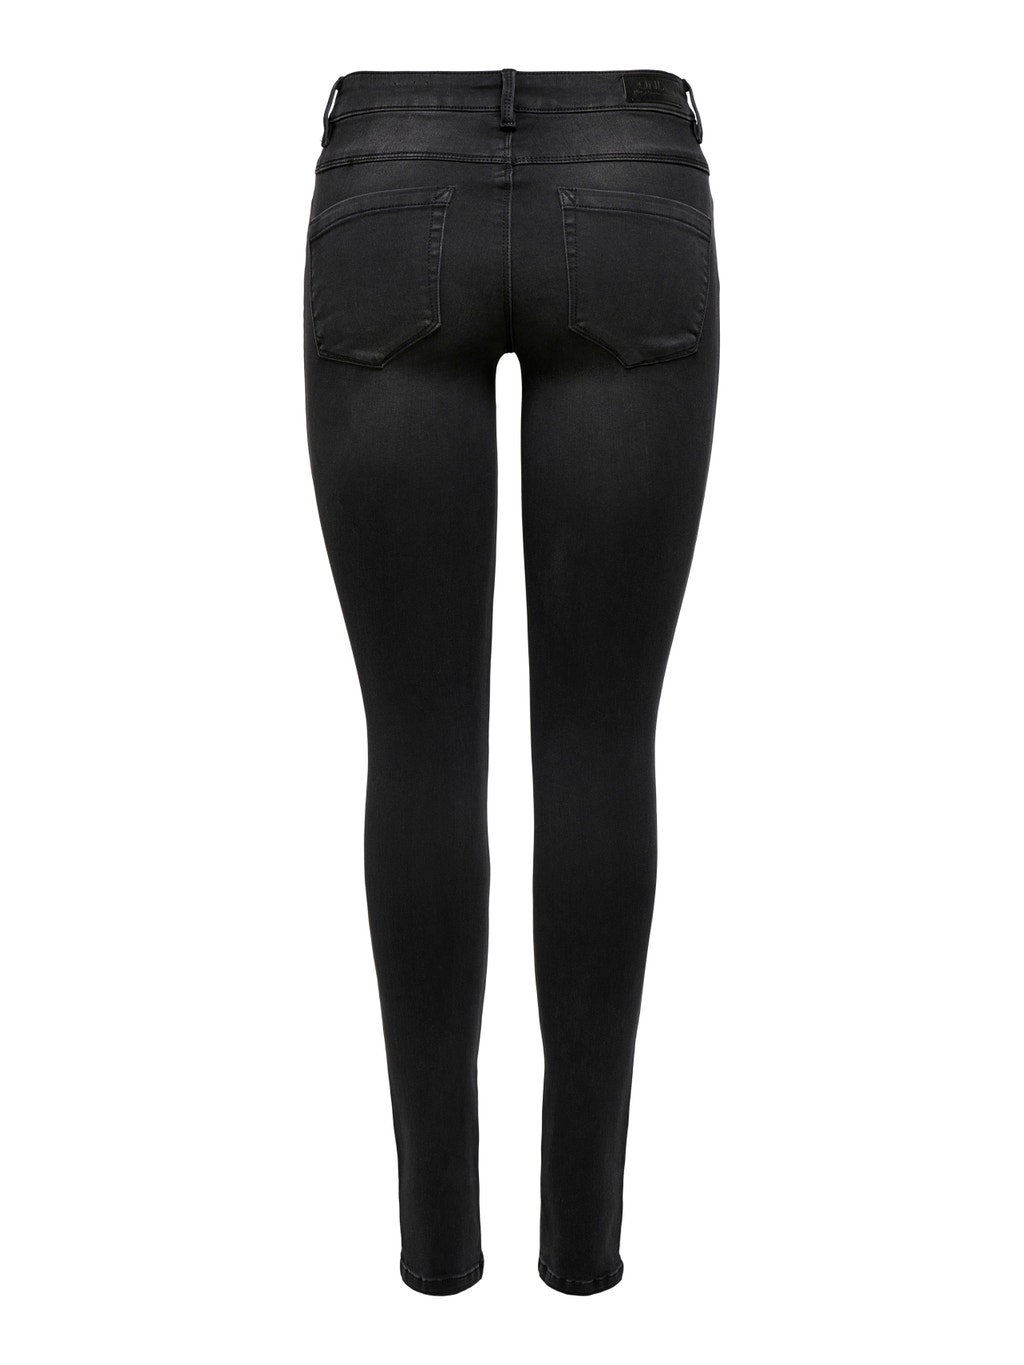 ONLRoyal reg Skinny fit jeans | Black | ONLY®